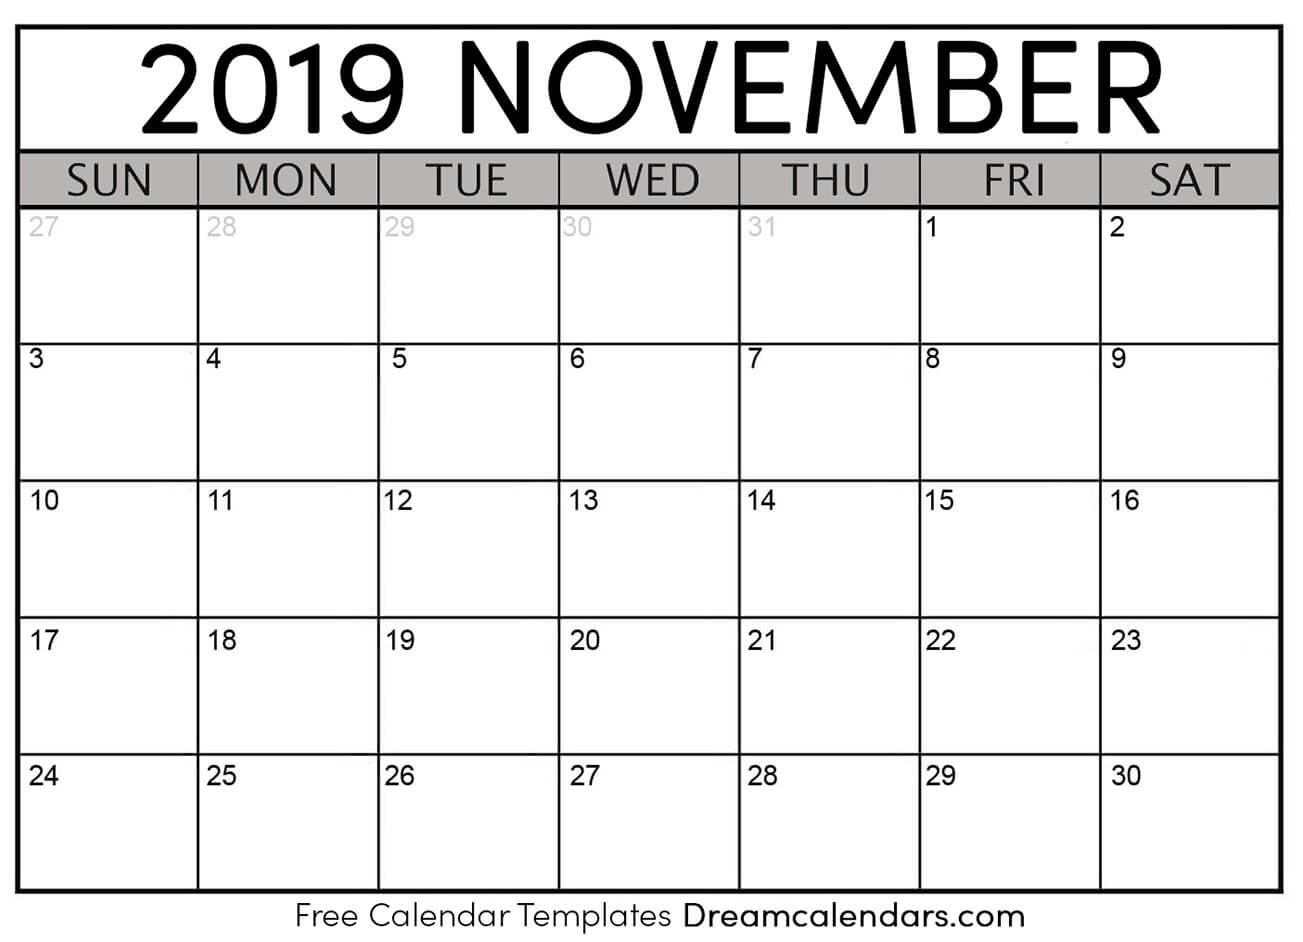 Free Printable Calendar Templates November 2019